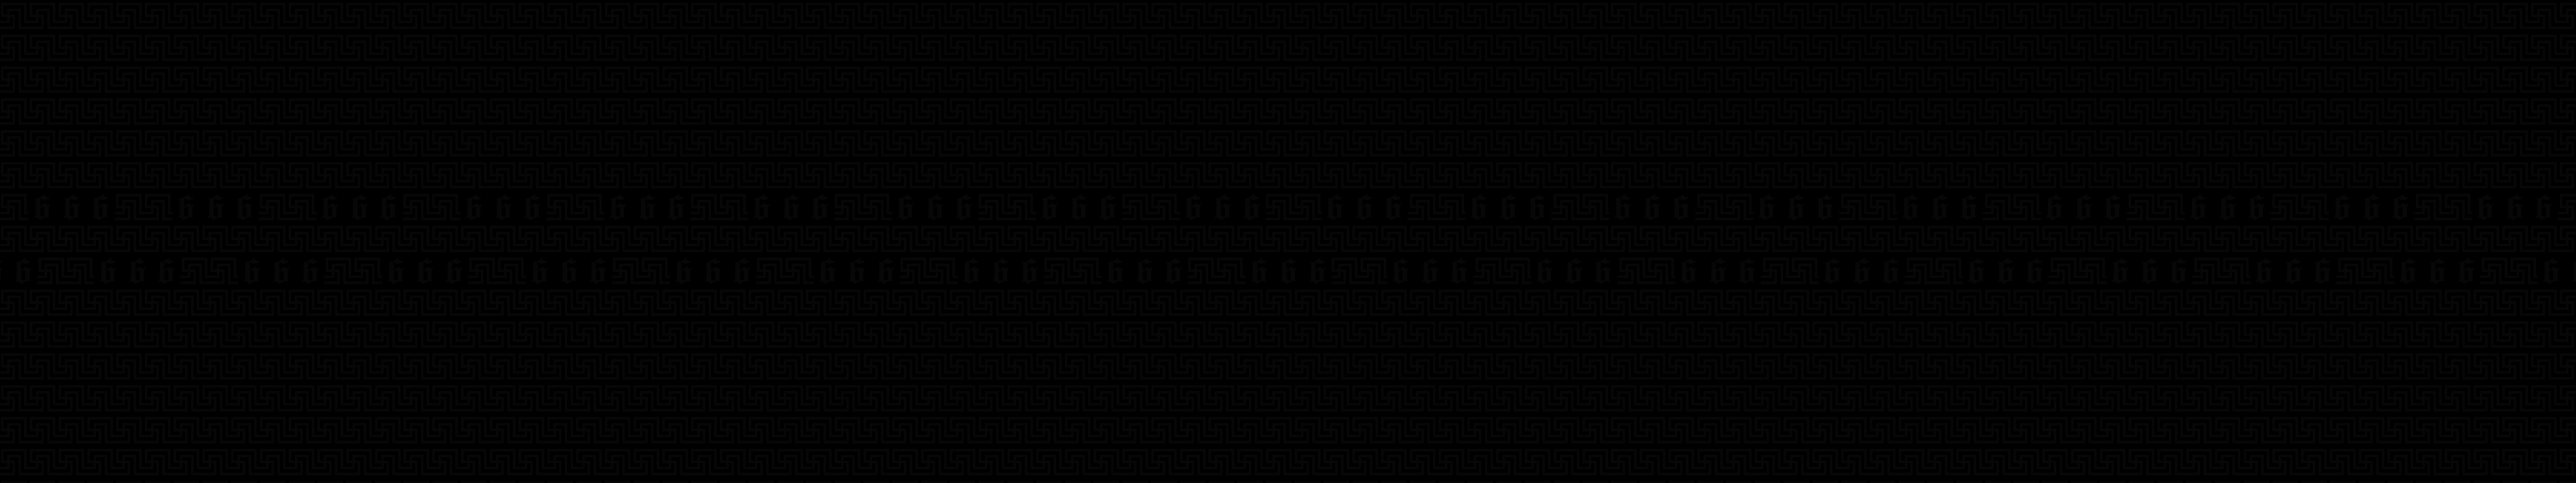 Pattern Black Background Minimalism Triple Screen 7680x1440